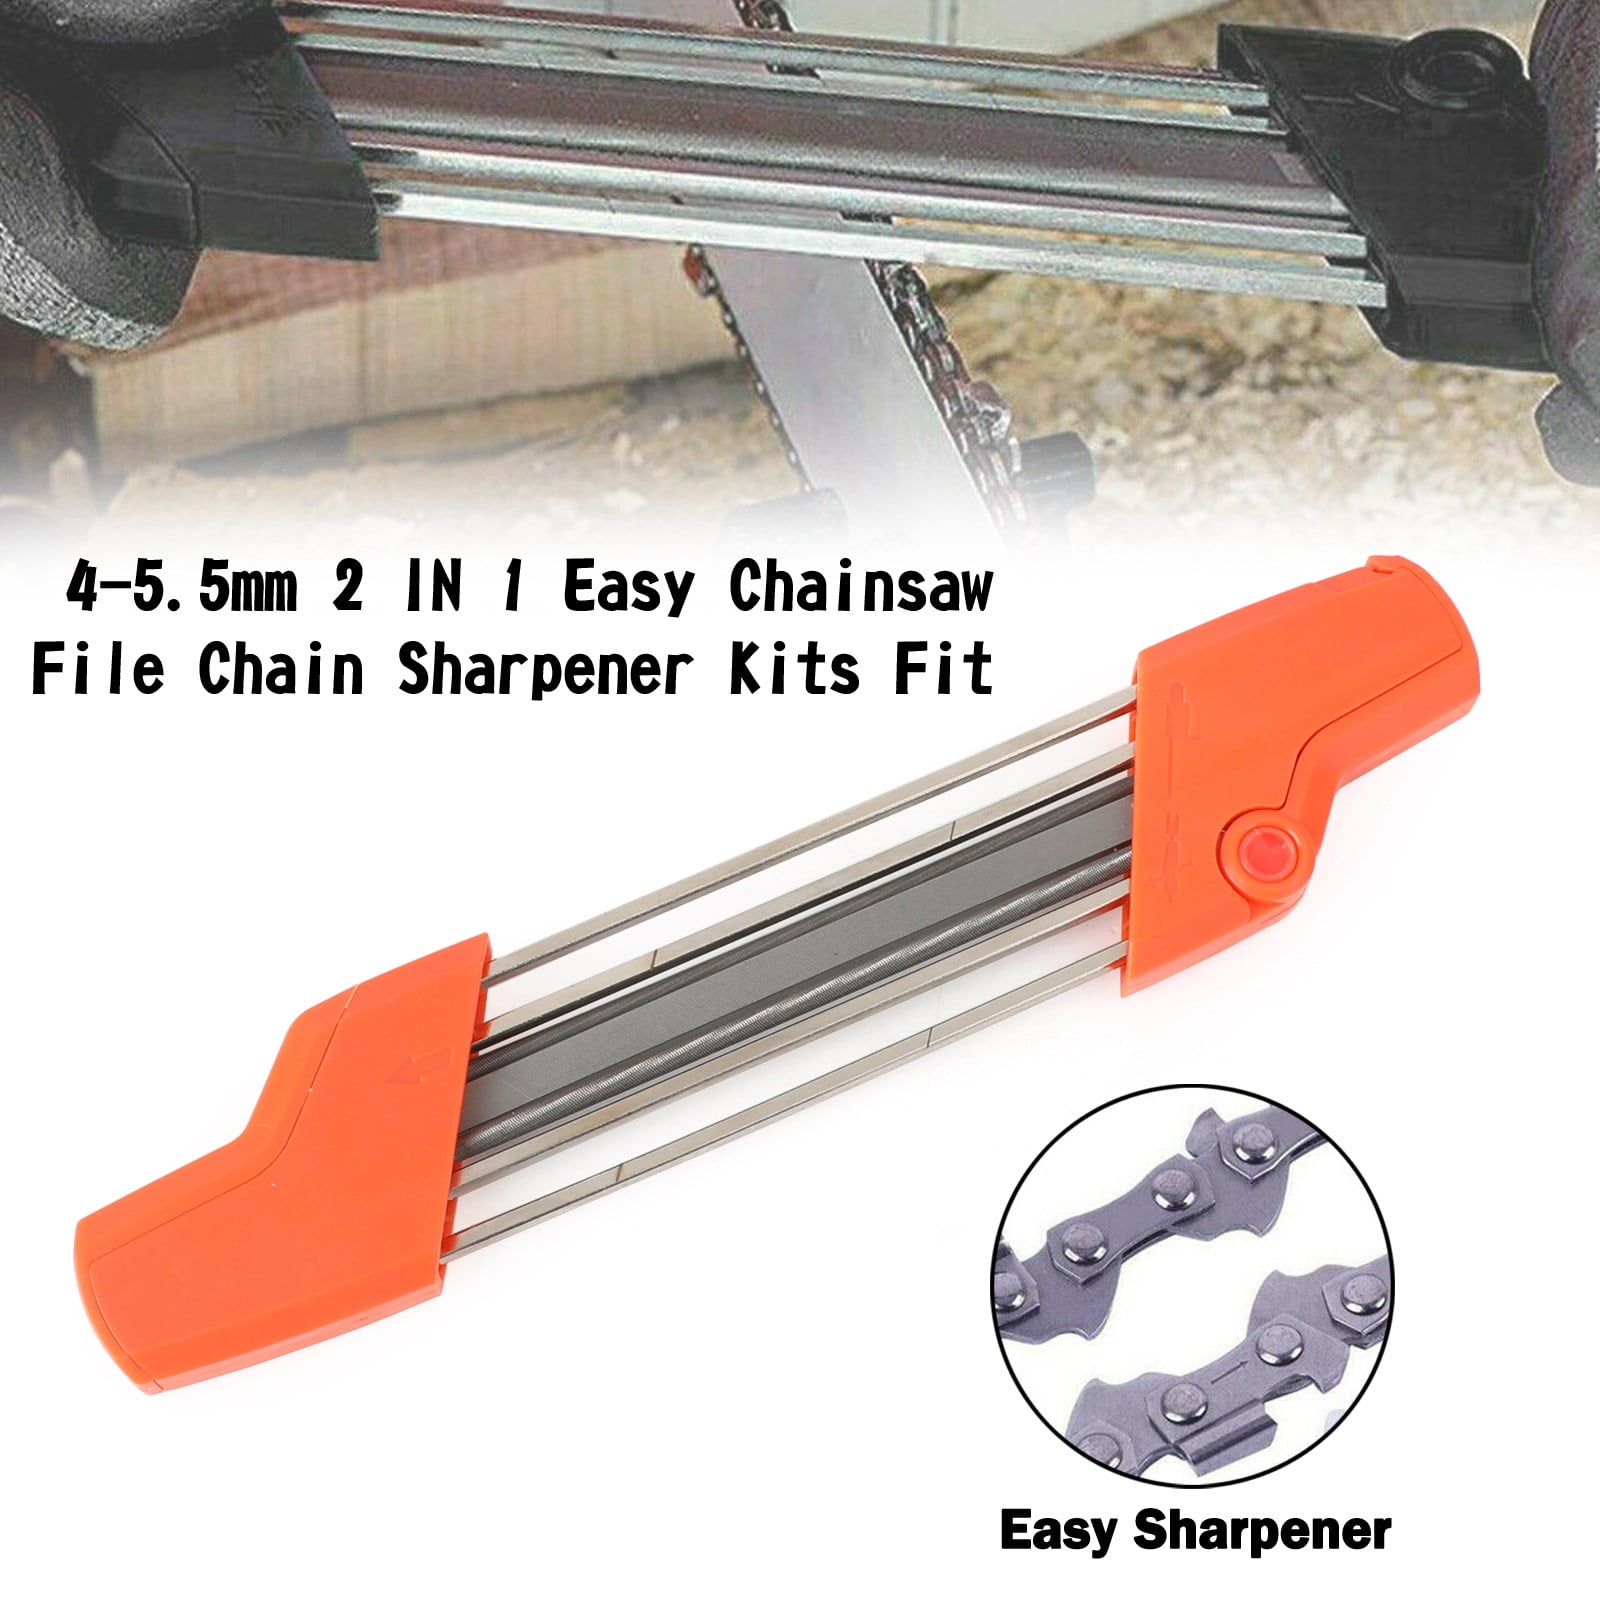 13/64 Chain Saw Sharpening Kit replaces Stihl  Files Two Handles Depth Gauge 